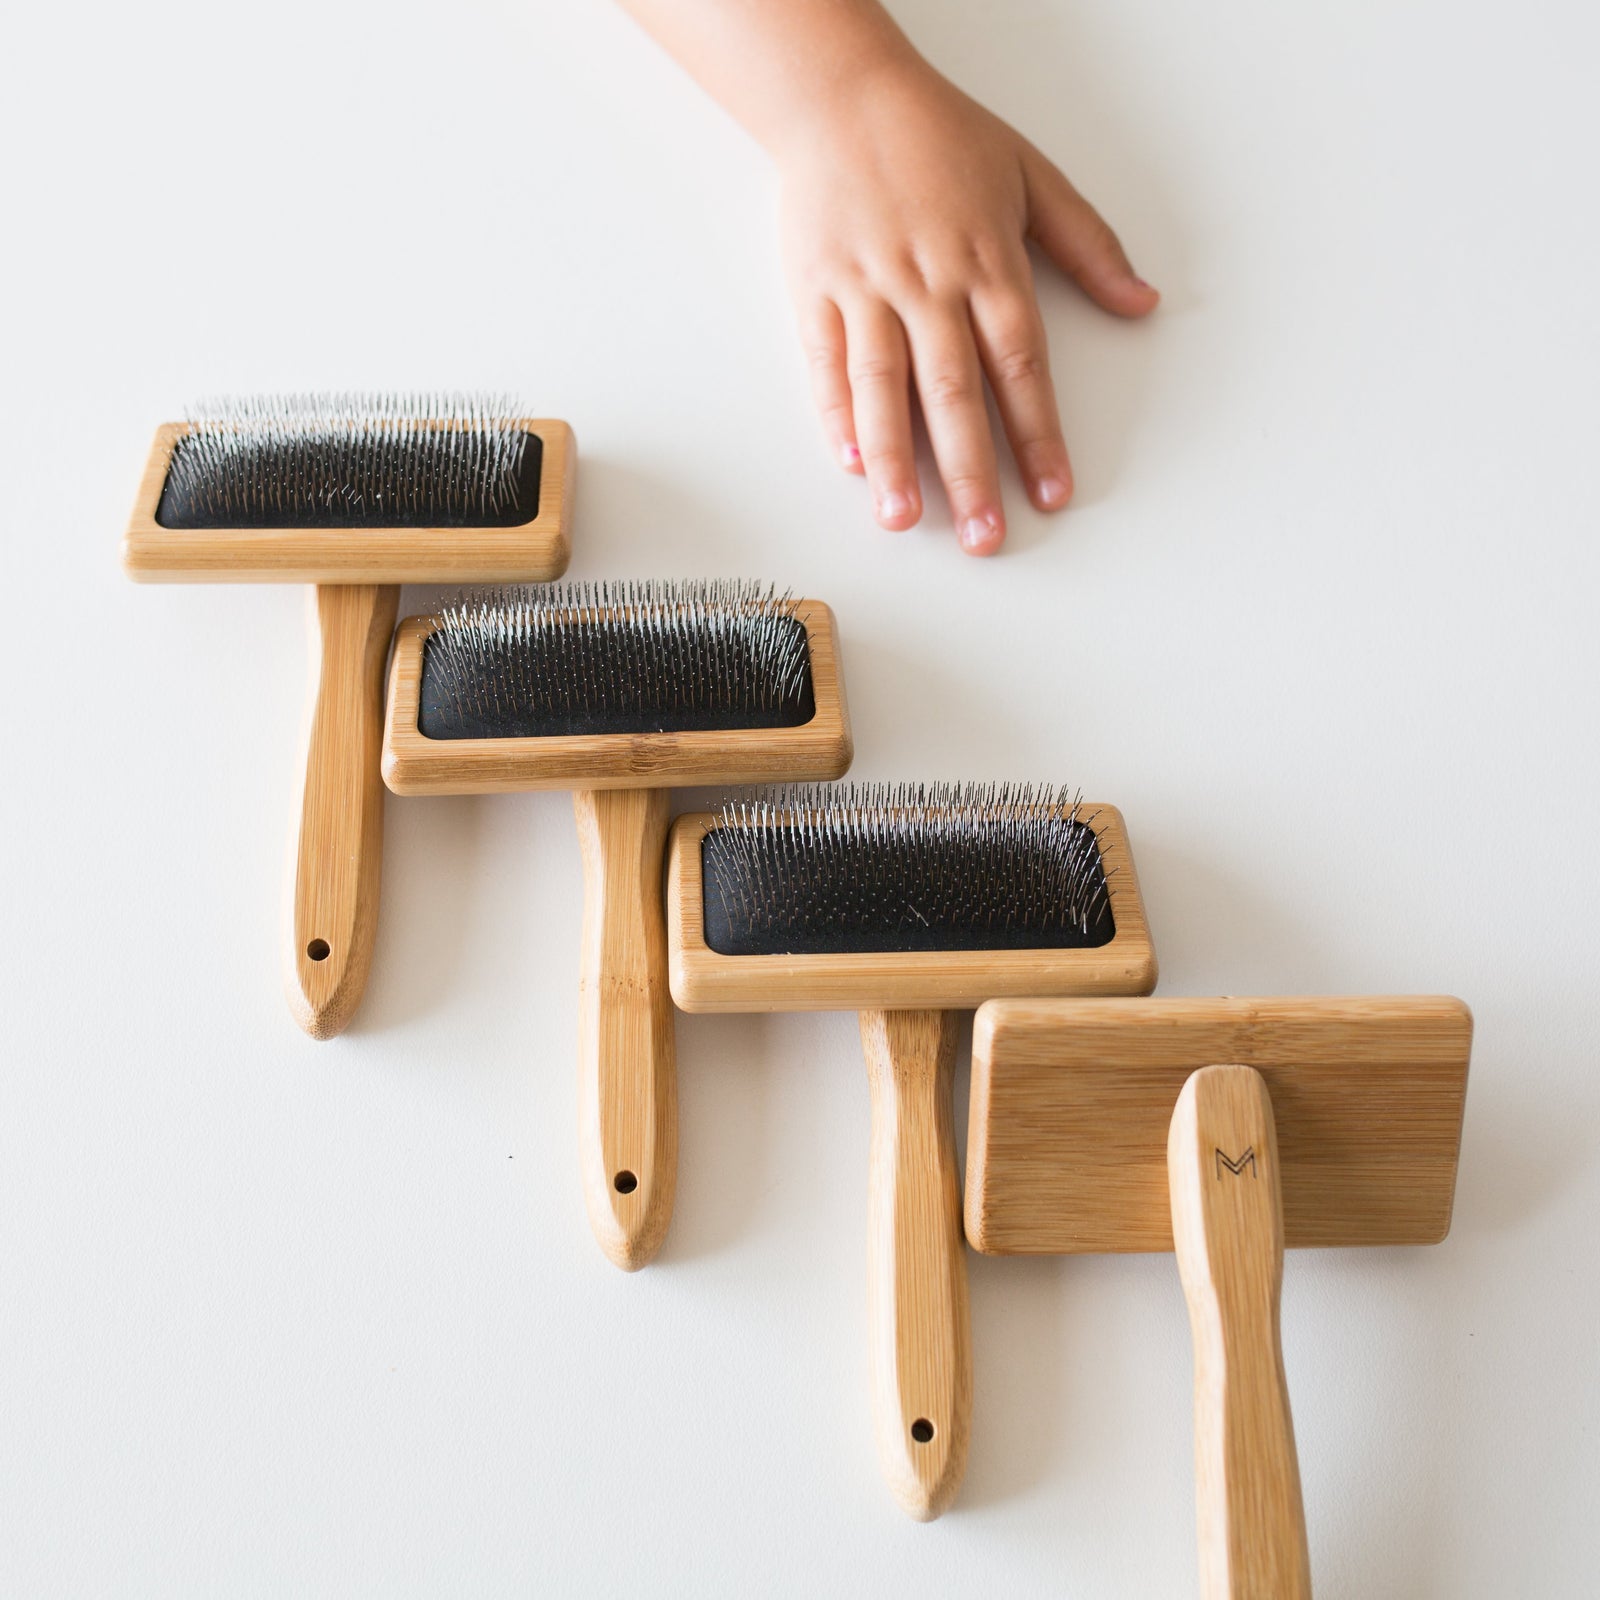 wooden loom&tassel comb and hand weaving comb